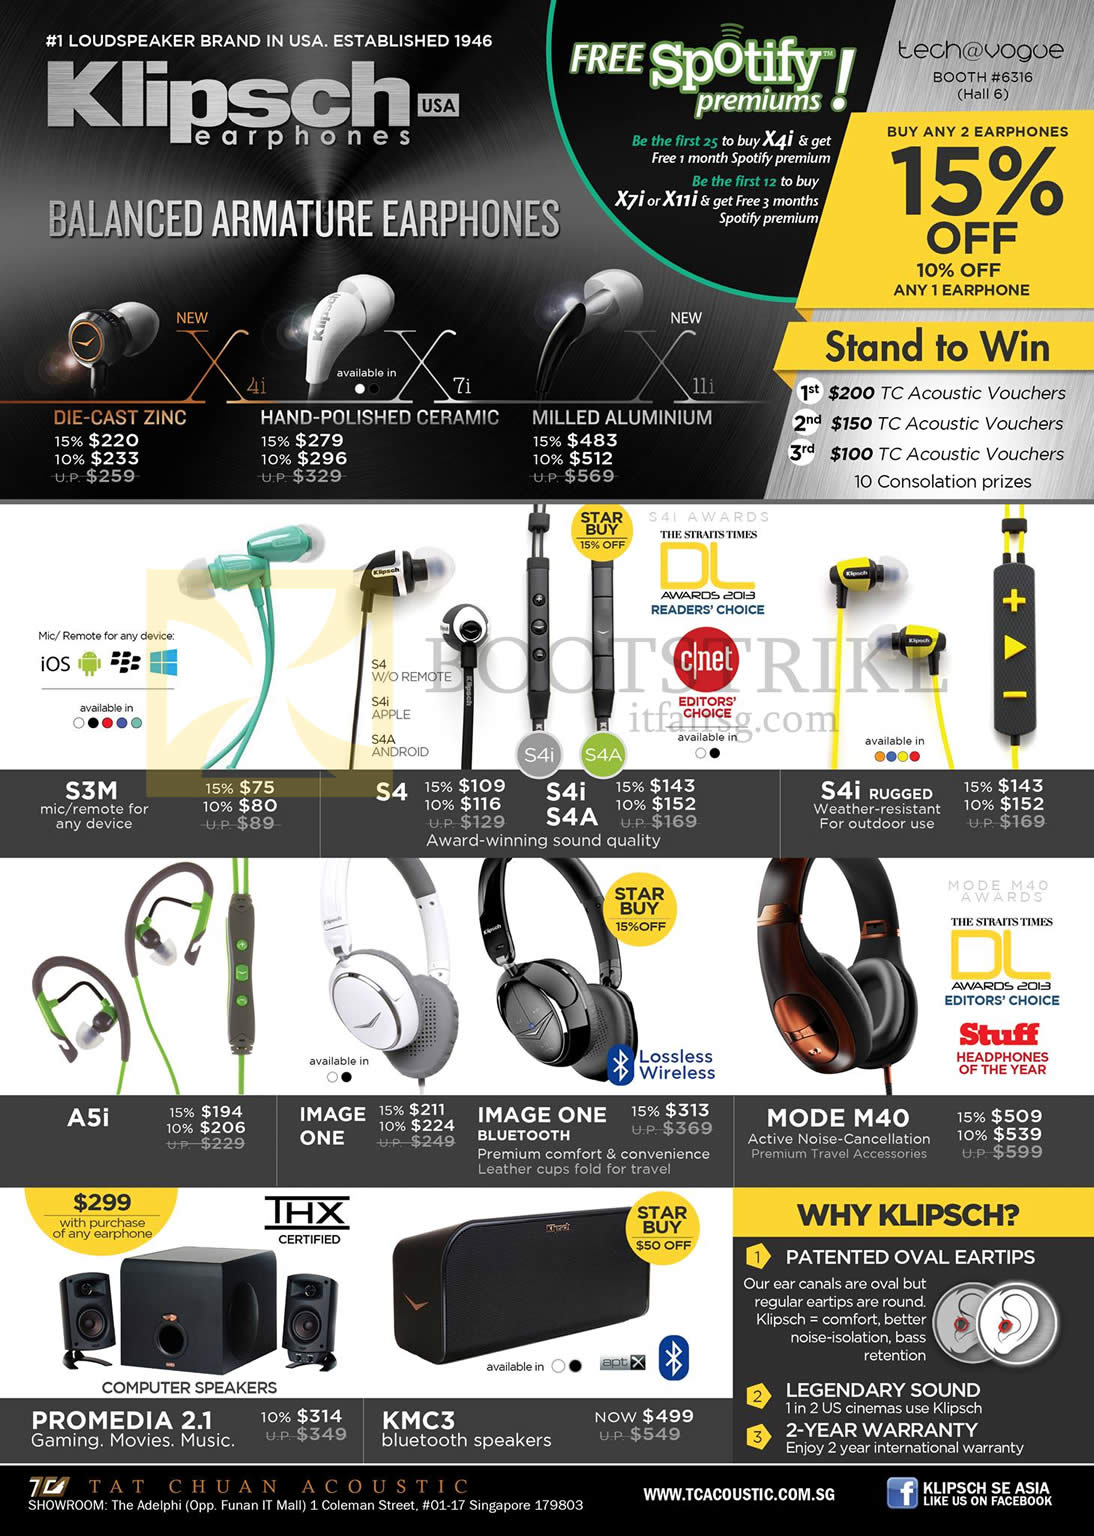 COMEX 2013 price list image brochure of Newstead Tech Vogue Klipsch Earphones X4i, X7i, 11i, S3M, S4, S4i, S4a, A5i, Image One, Mode M40 Headphones, Promedia 2.1 Speakers, KMC3